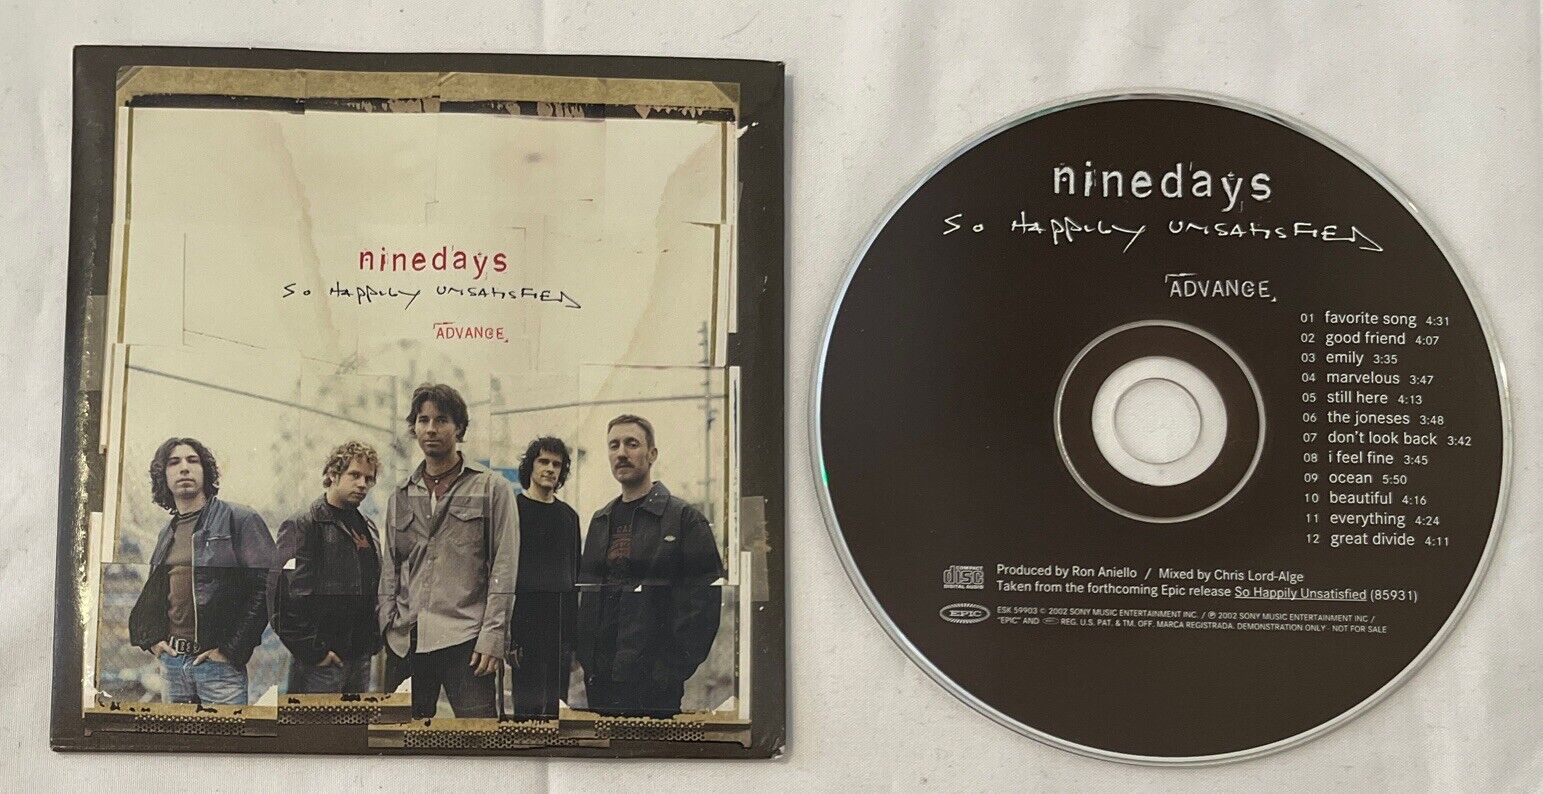 2002 VERY RARE Advance Copy PROMO - NINE DAYS So Happily Unsatisfied CD